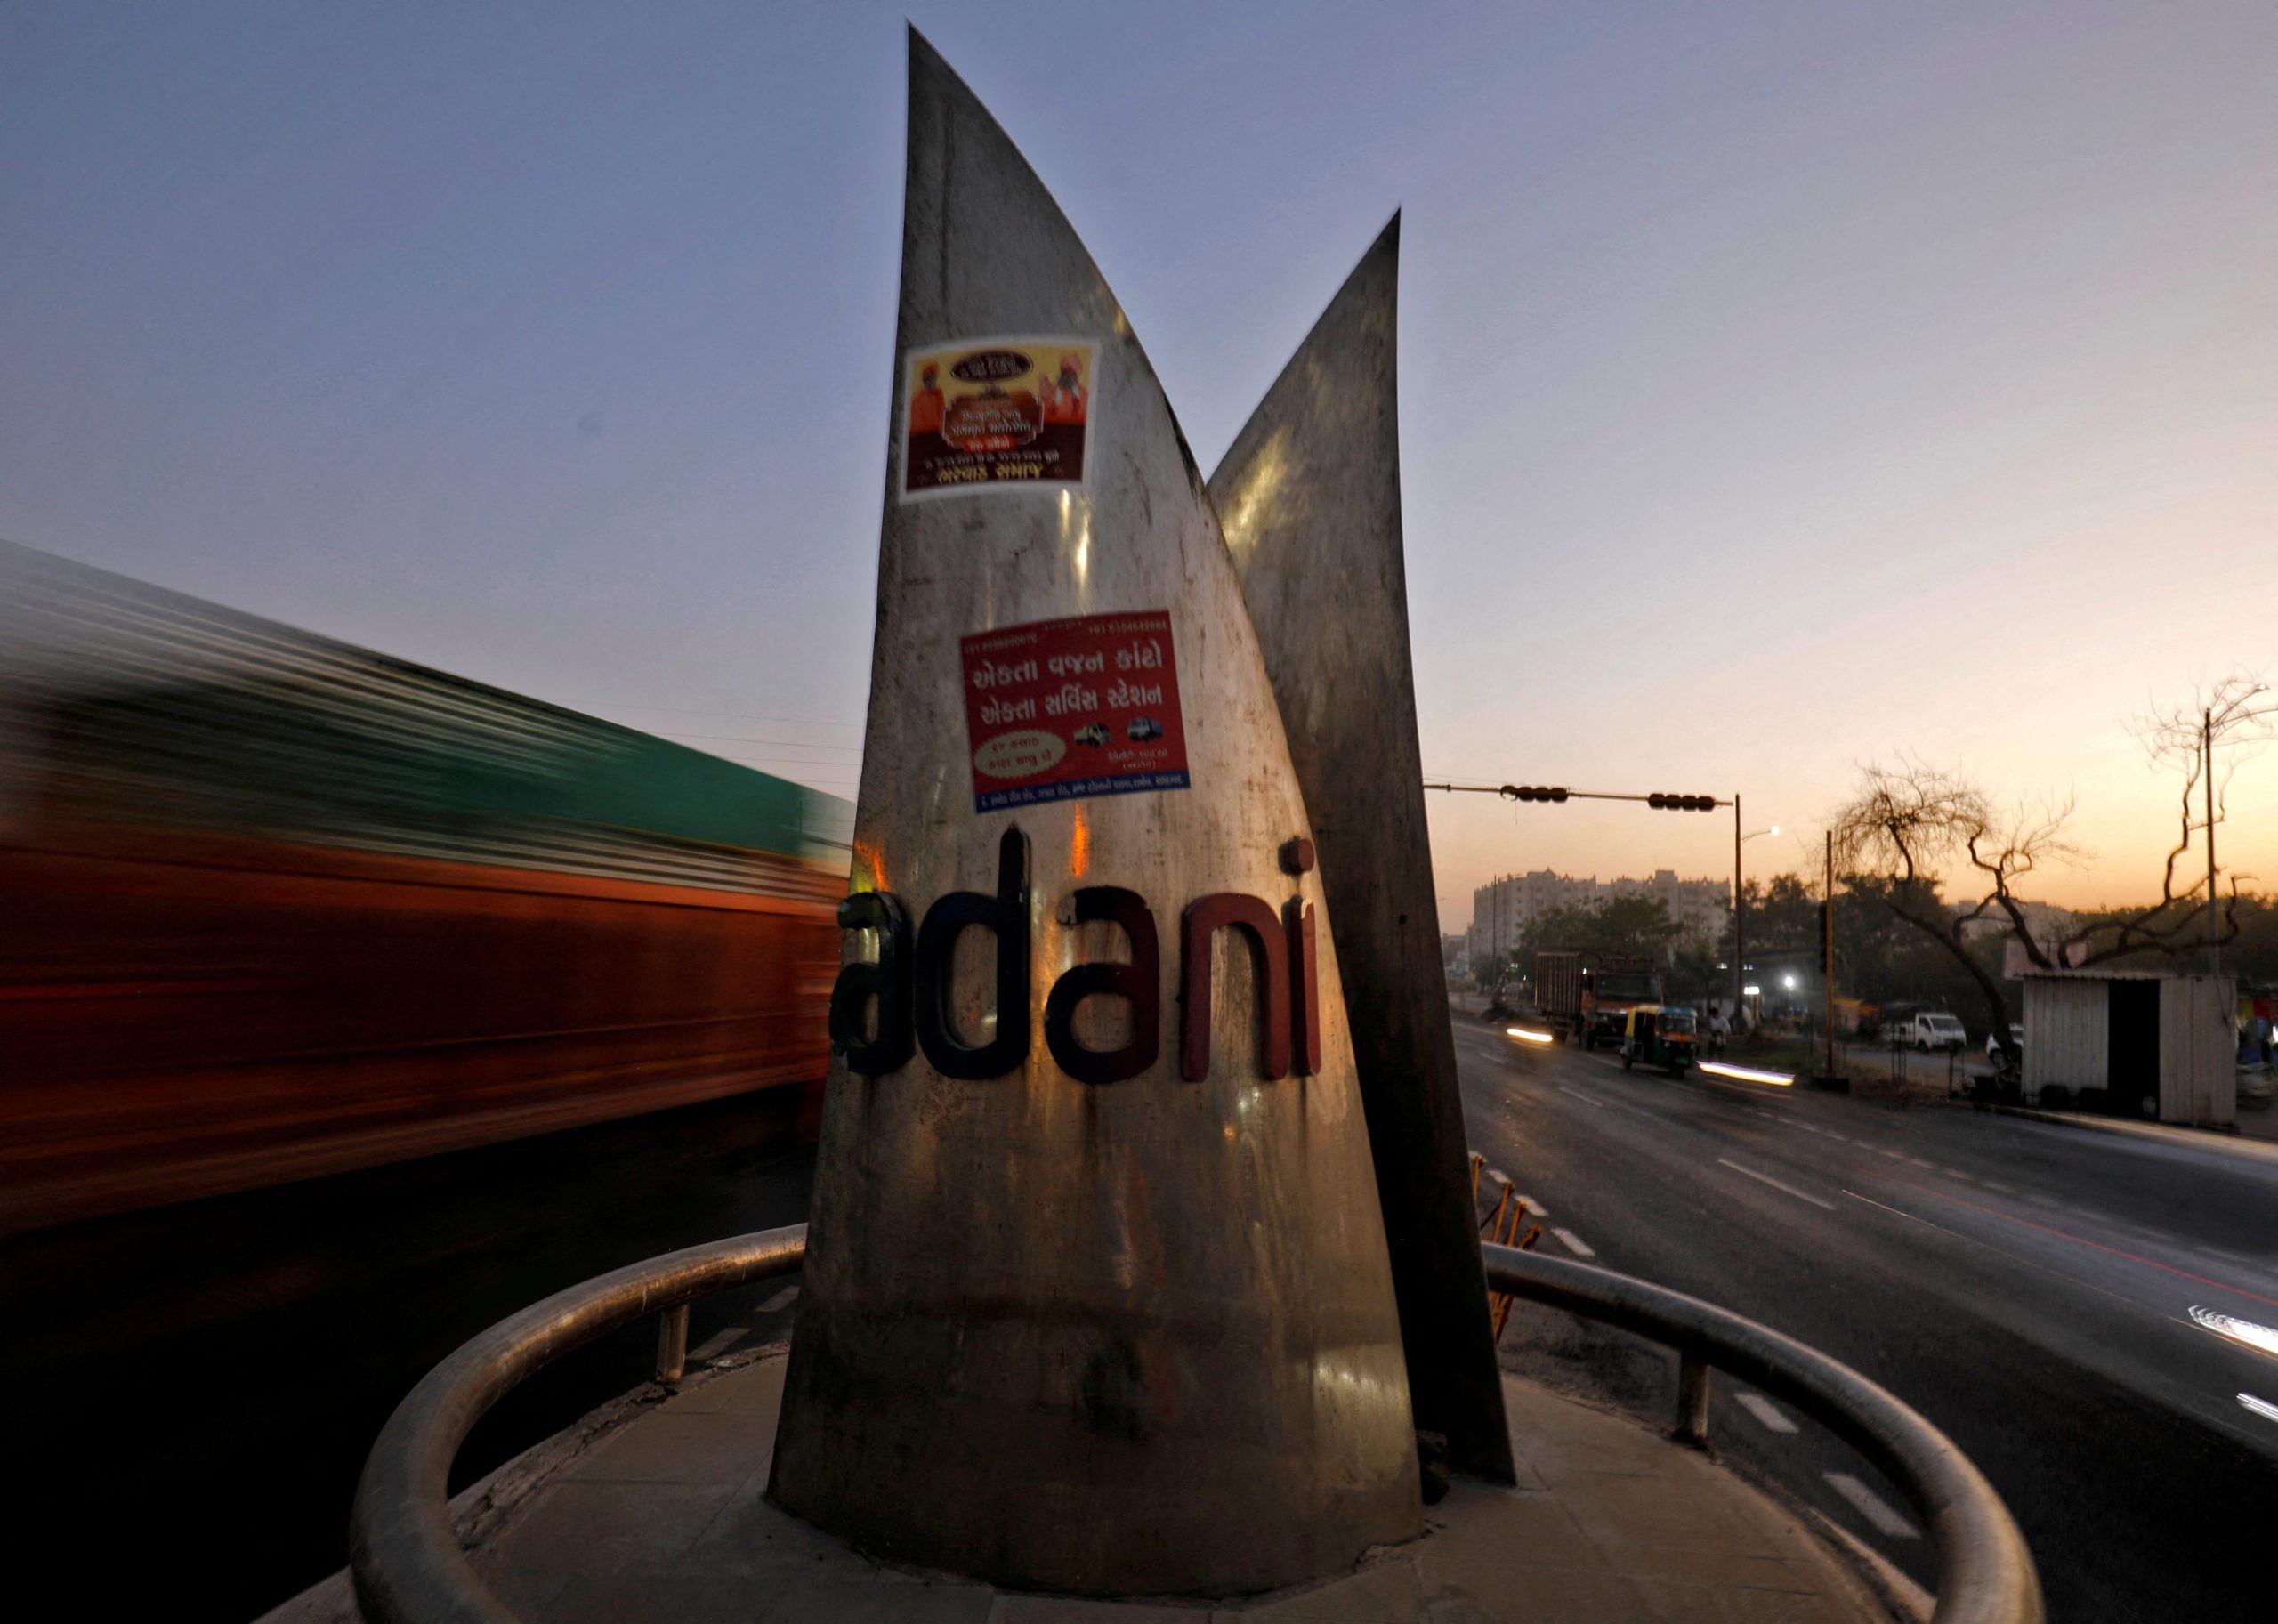 Adani crisis ignites Indian contagion fears, credit warnings